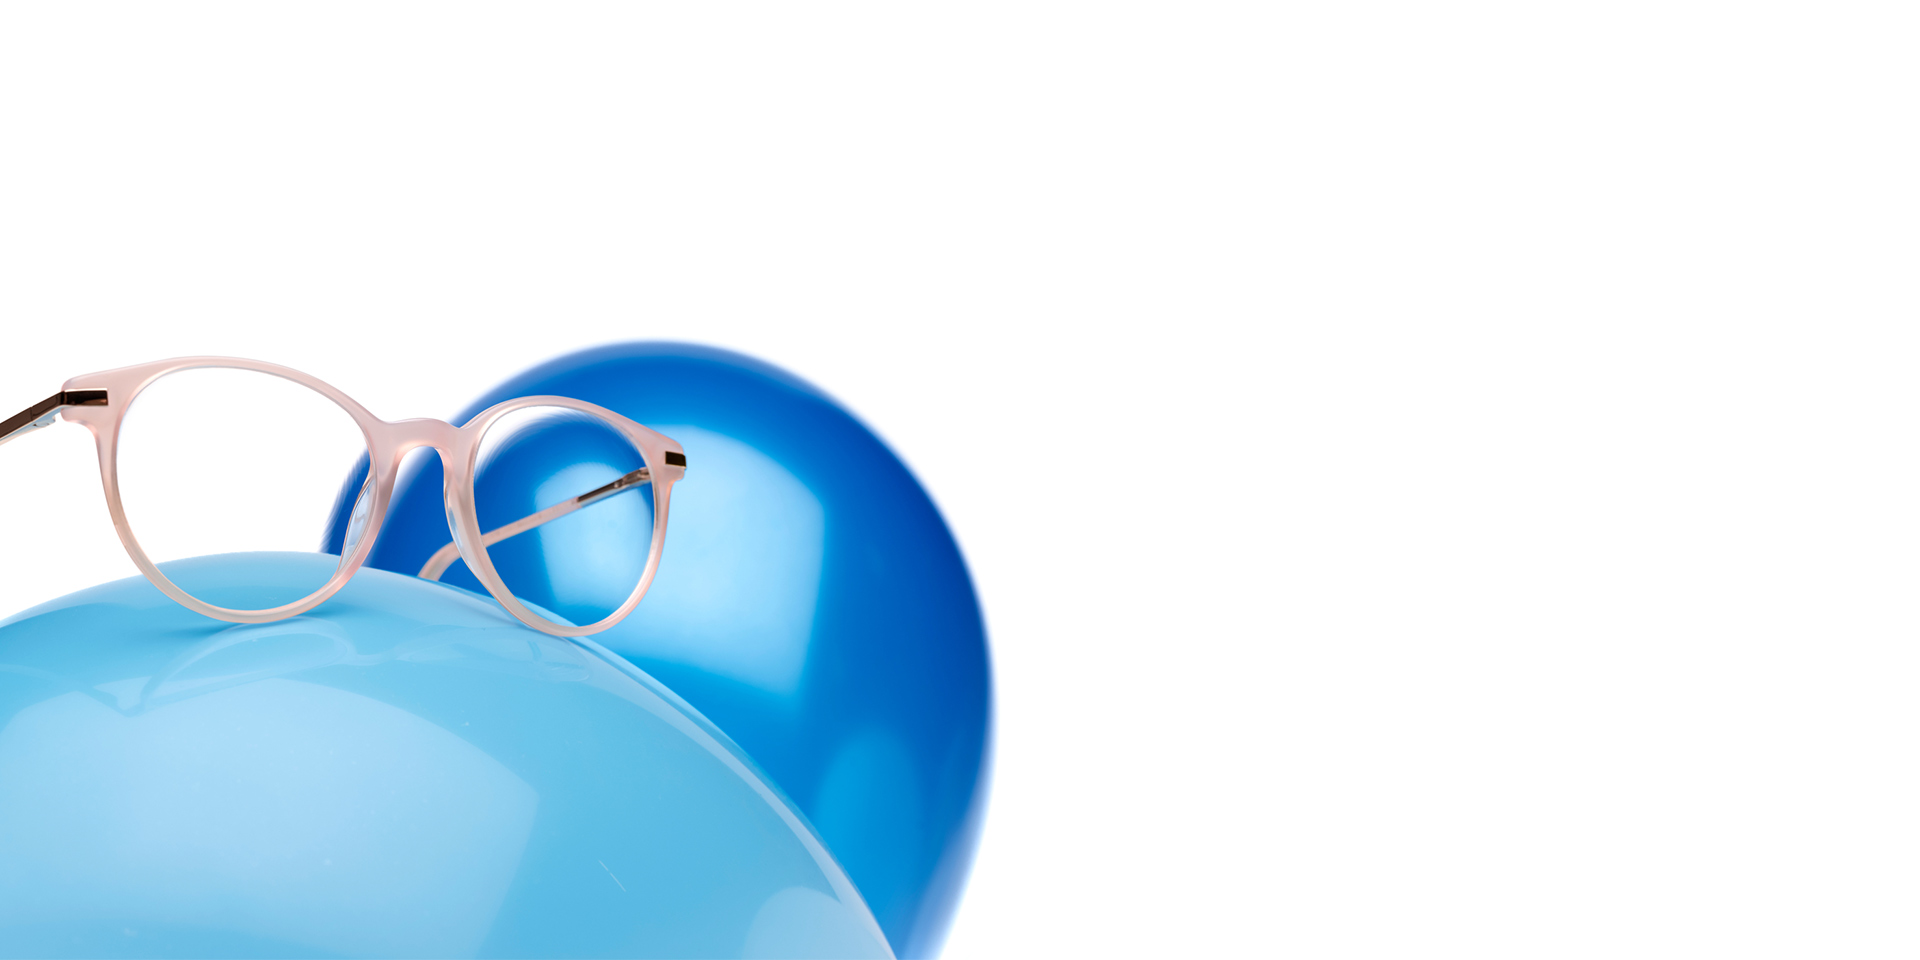 ZEISS MyoCare-glas i en rosabeige båge visas på en ljusblå ballong. I bakgrunden finns ytterligare en, något mörkare blå, ballong.